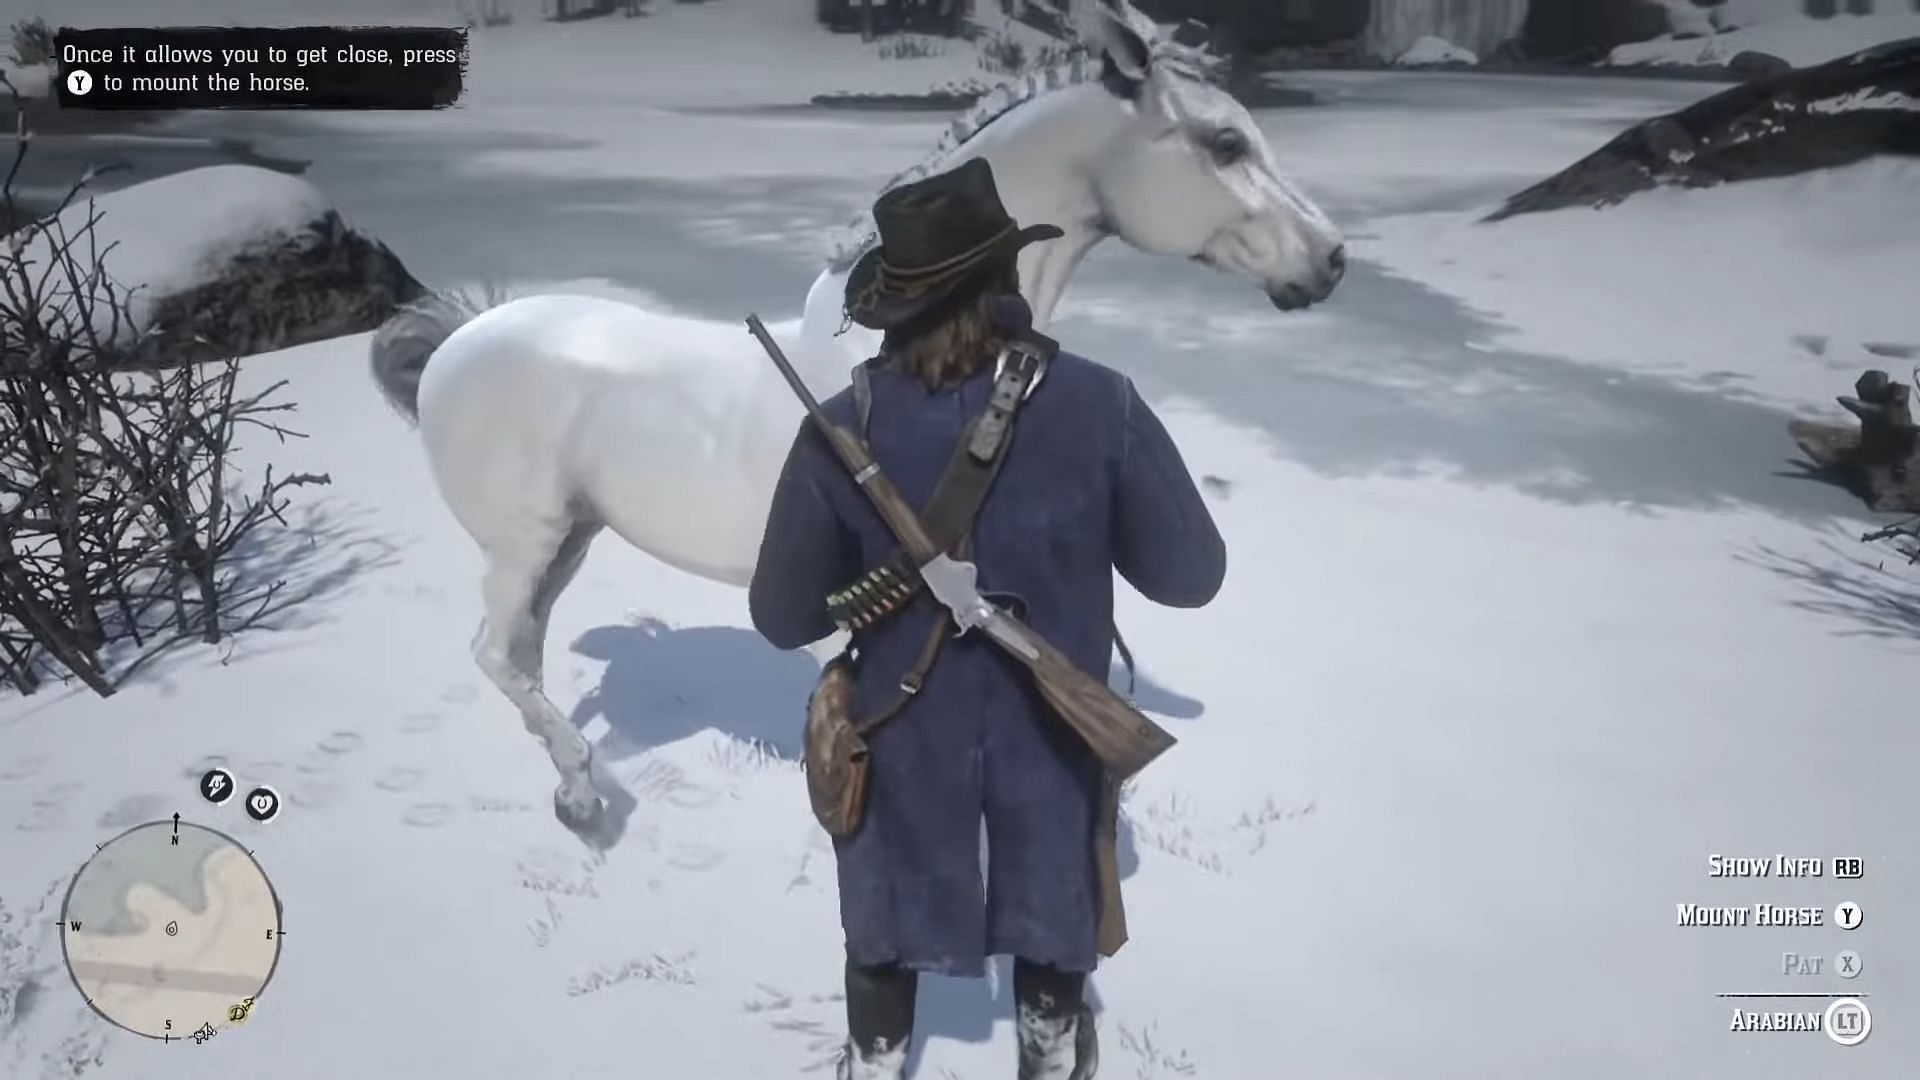 Arabian Horse in Read Dead Redemption 2 (Image via Rockstar Games || Player7 on YouTube)